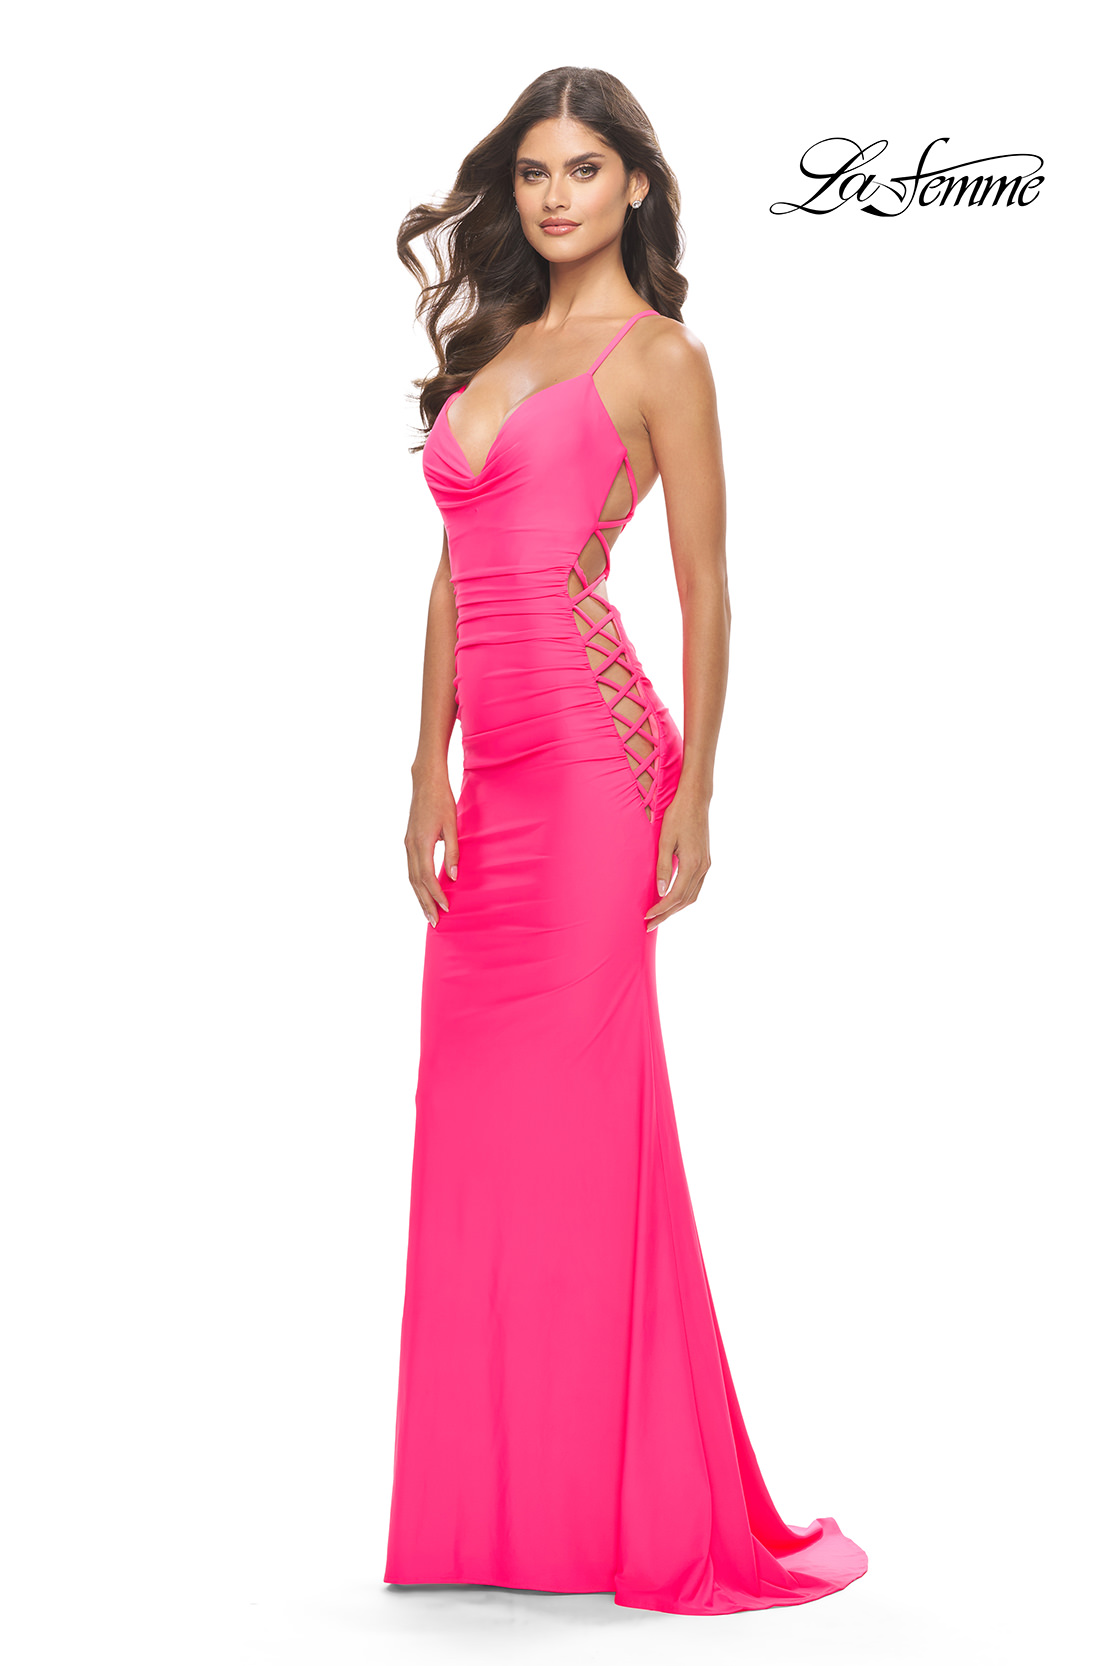 Fancypromdress Luxury Custom Prom Dresses 2024 Diamonds Rhinestones Pink Sparkly Prom Gowns 2025 Vestidos Robe Femme Soirée Fashion Party Dresses Black